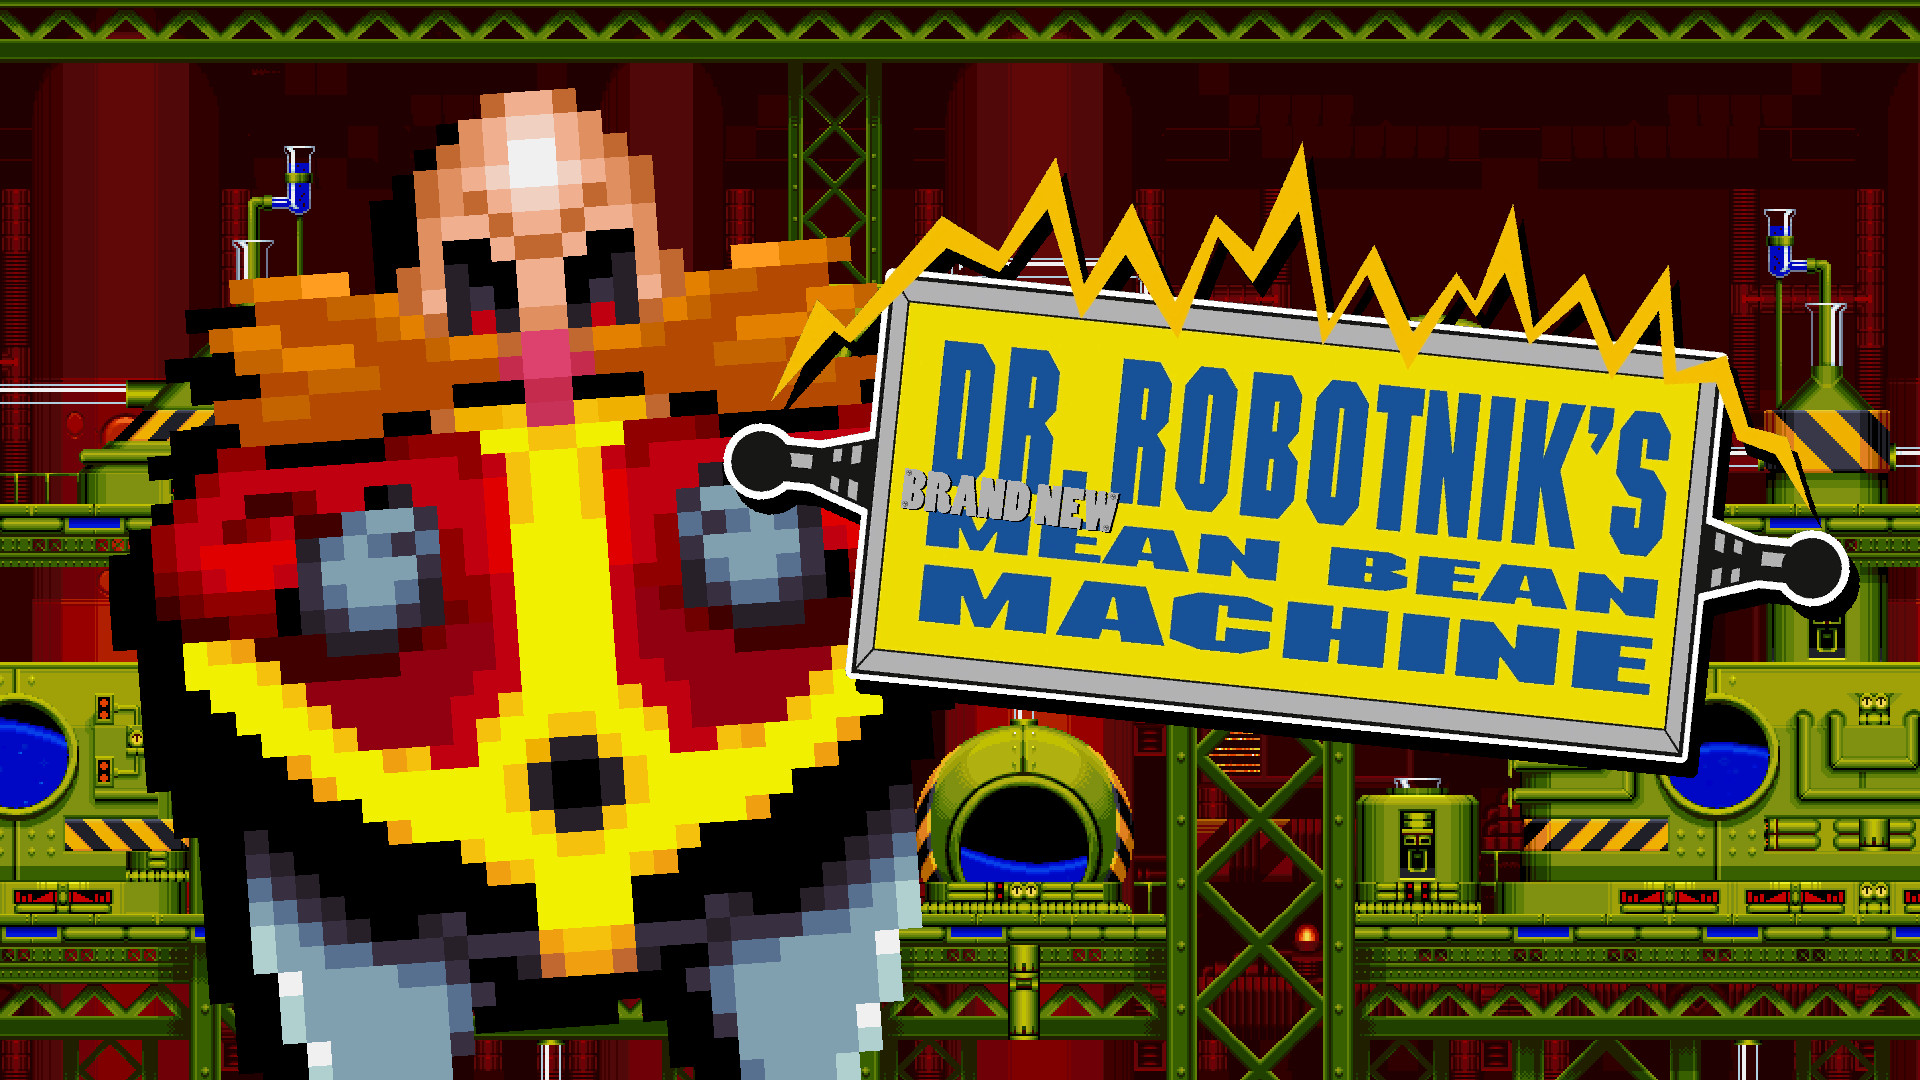 Dr Robotnik Facts and secrets - He Brands Inventions Worse Than Batman